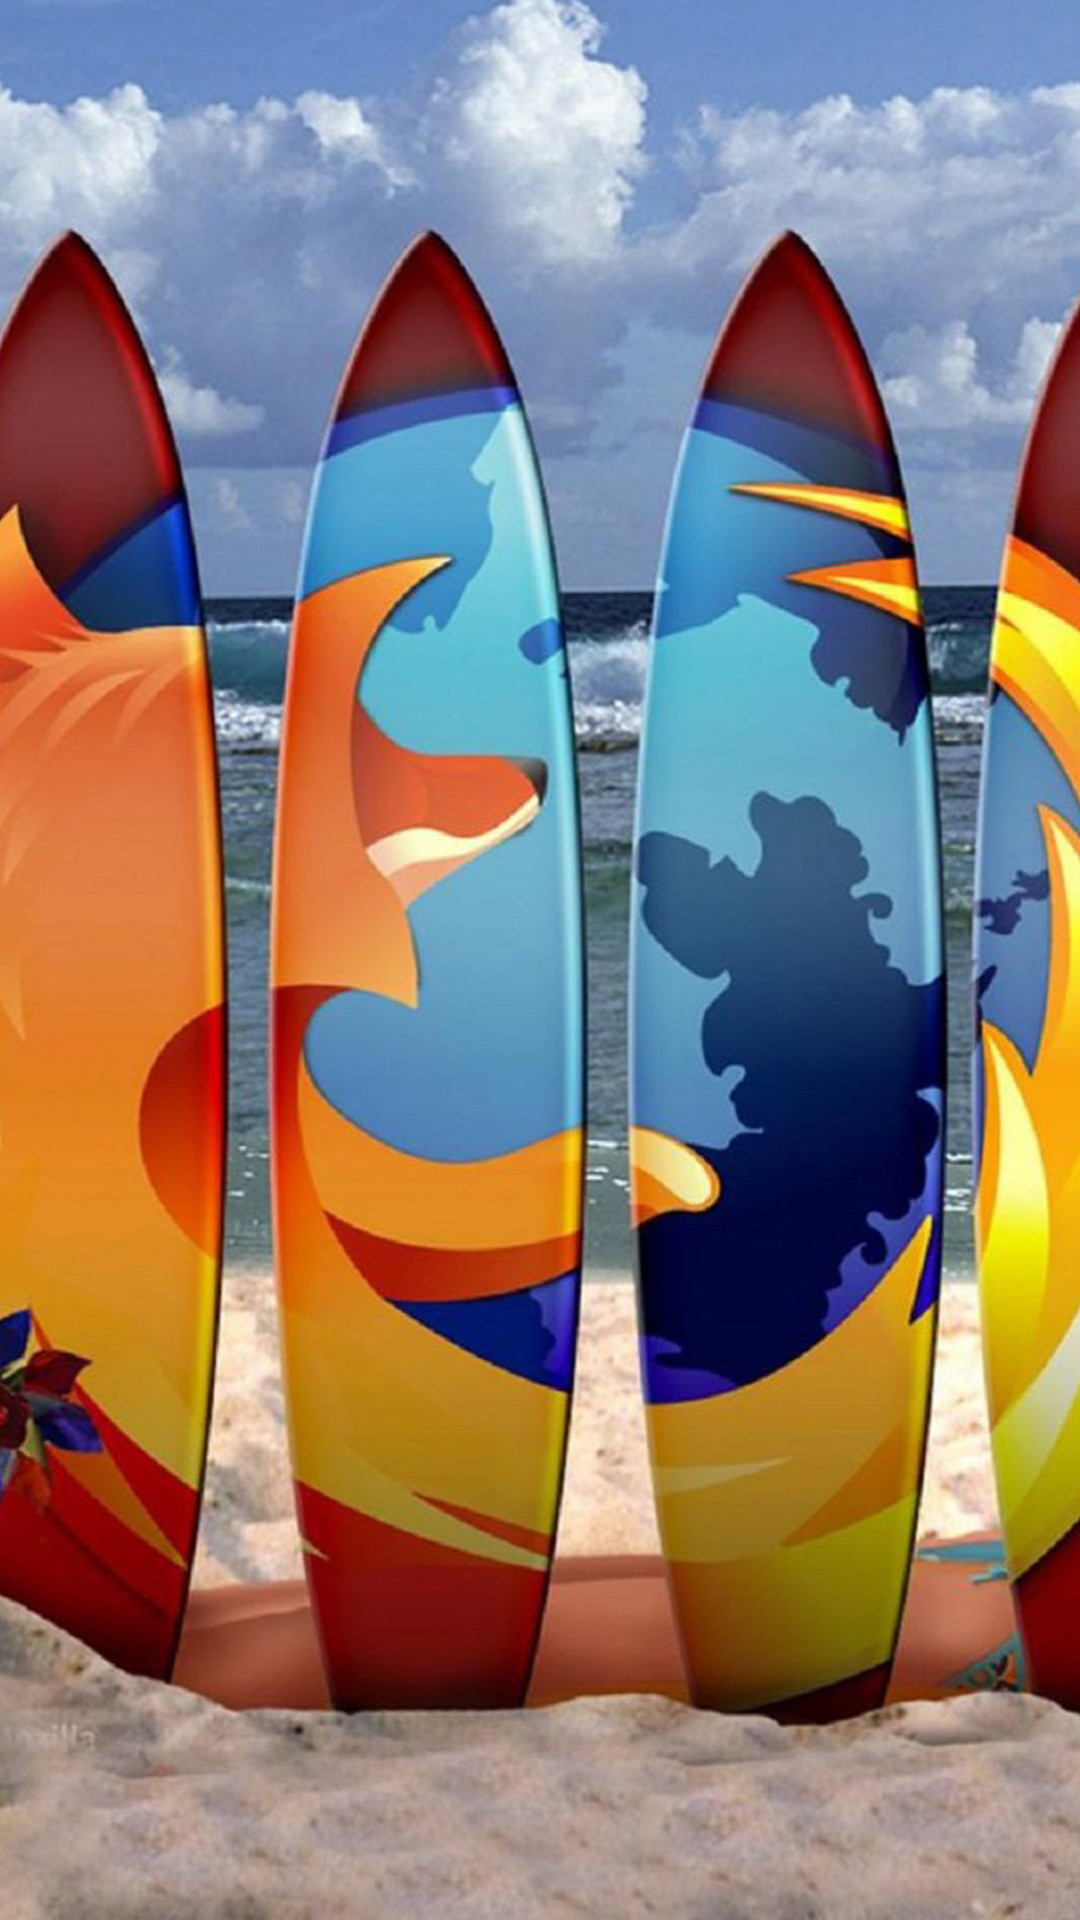 Firefox Surf Boards Beach iPhone 6 Plus HD Wallpaper